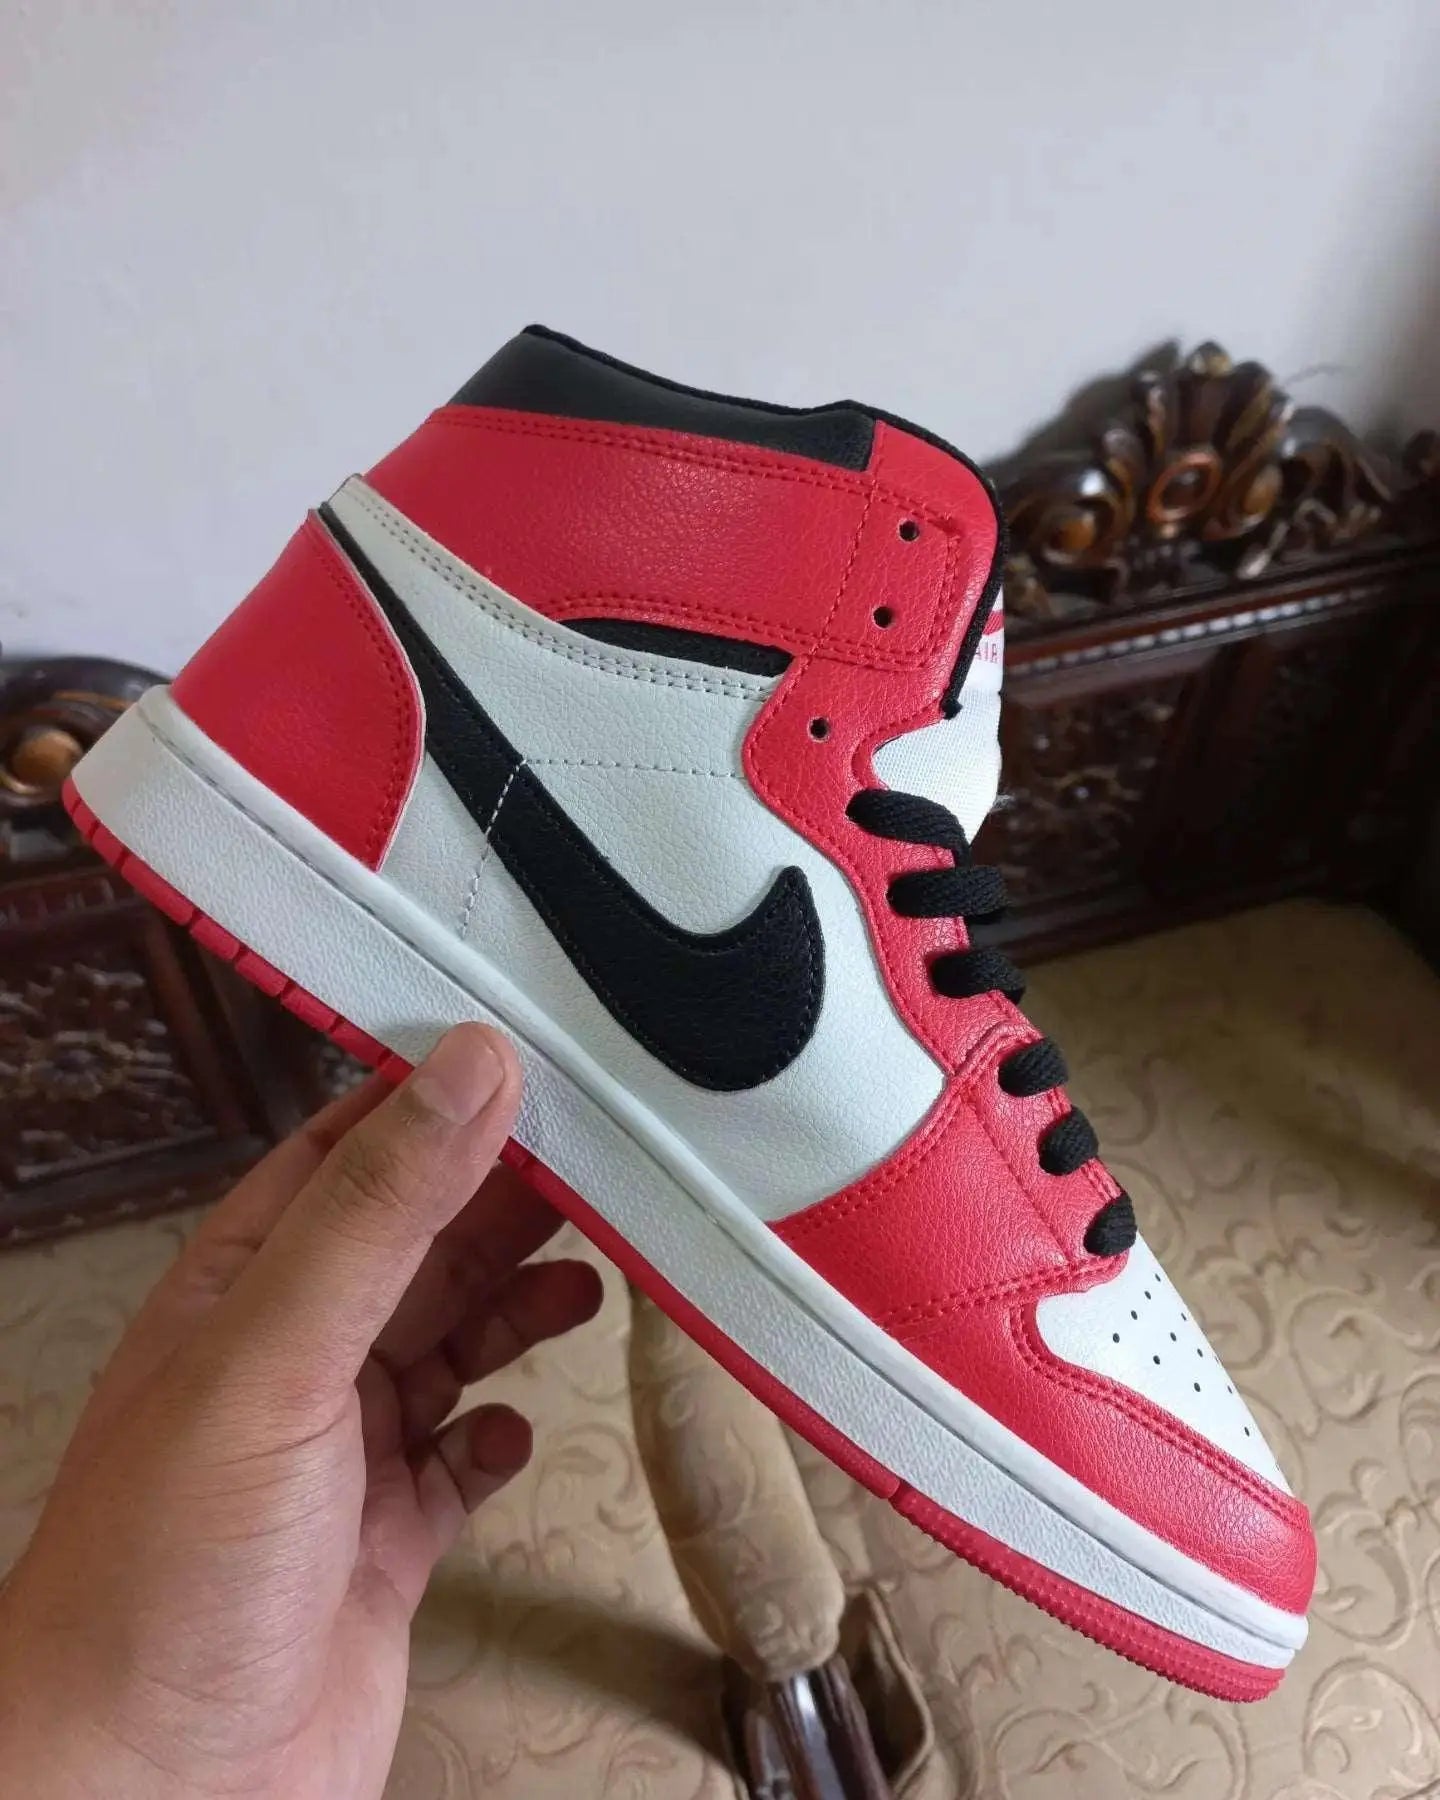 Nike Air Jordan 1 Chicago Red(Standard batch) - Sneak Kicks